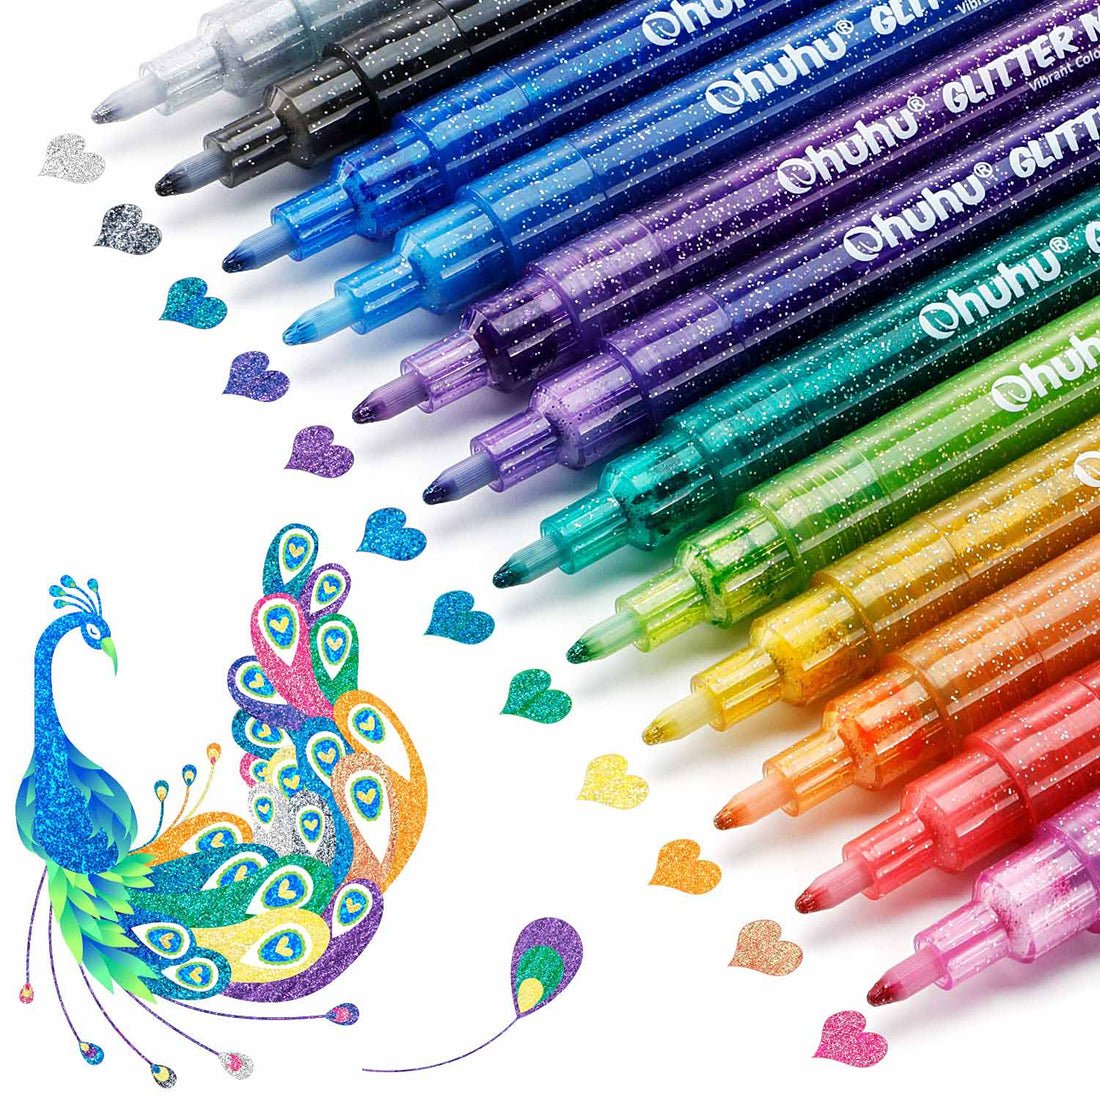 Ohuhu Glitter Metallic Marker Pens - 12 Color Set - The Merri Artist - merriartist.com